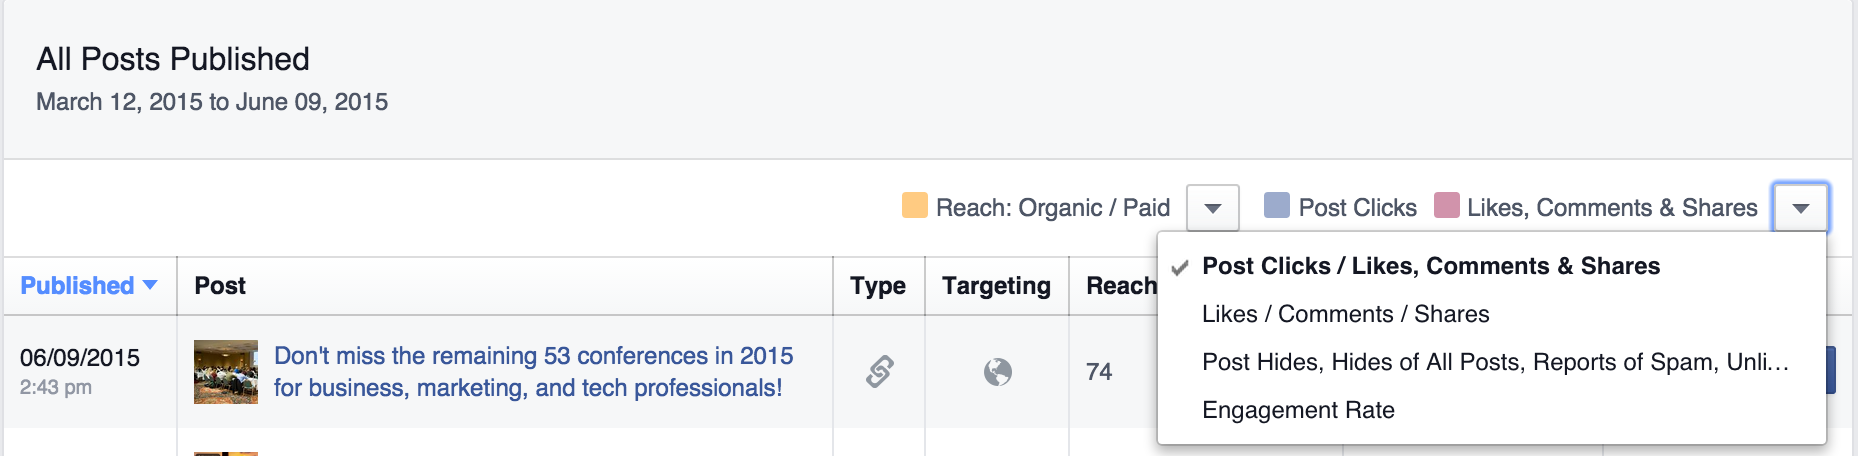 facebook metrics post clicks screenshot